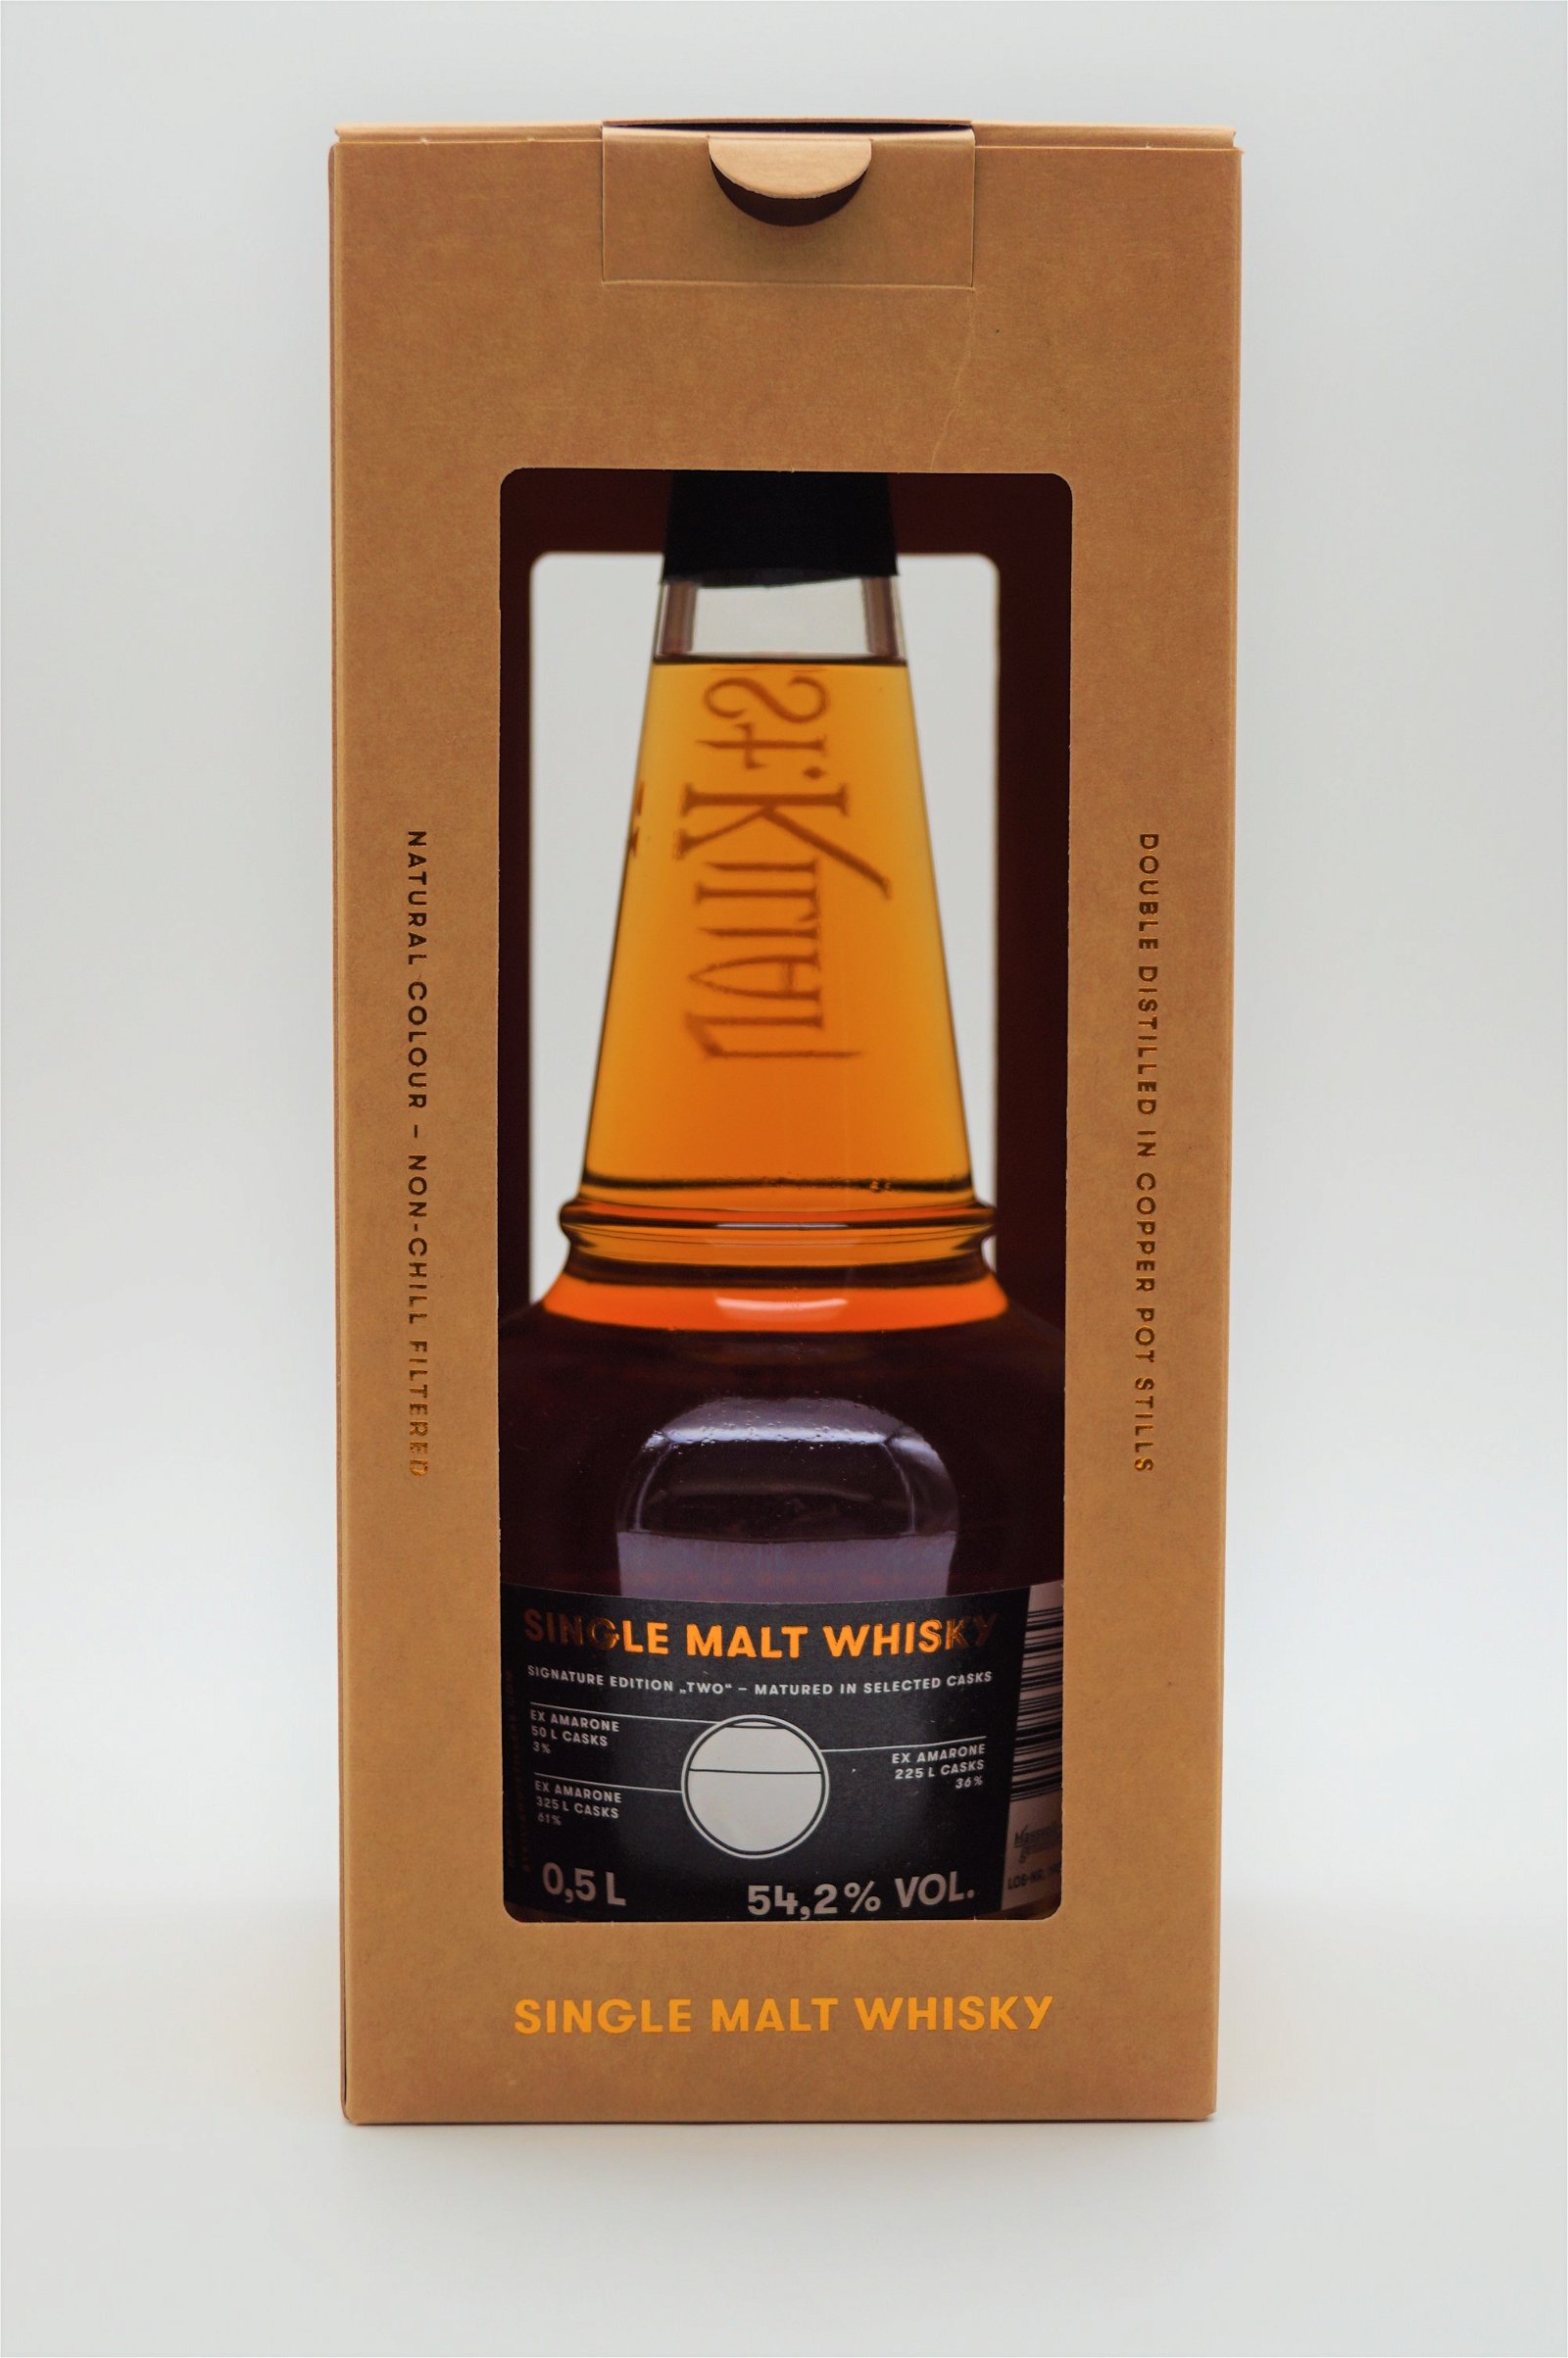 St. Kilian Signature Edition Two Single Malt Whisky